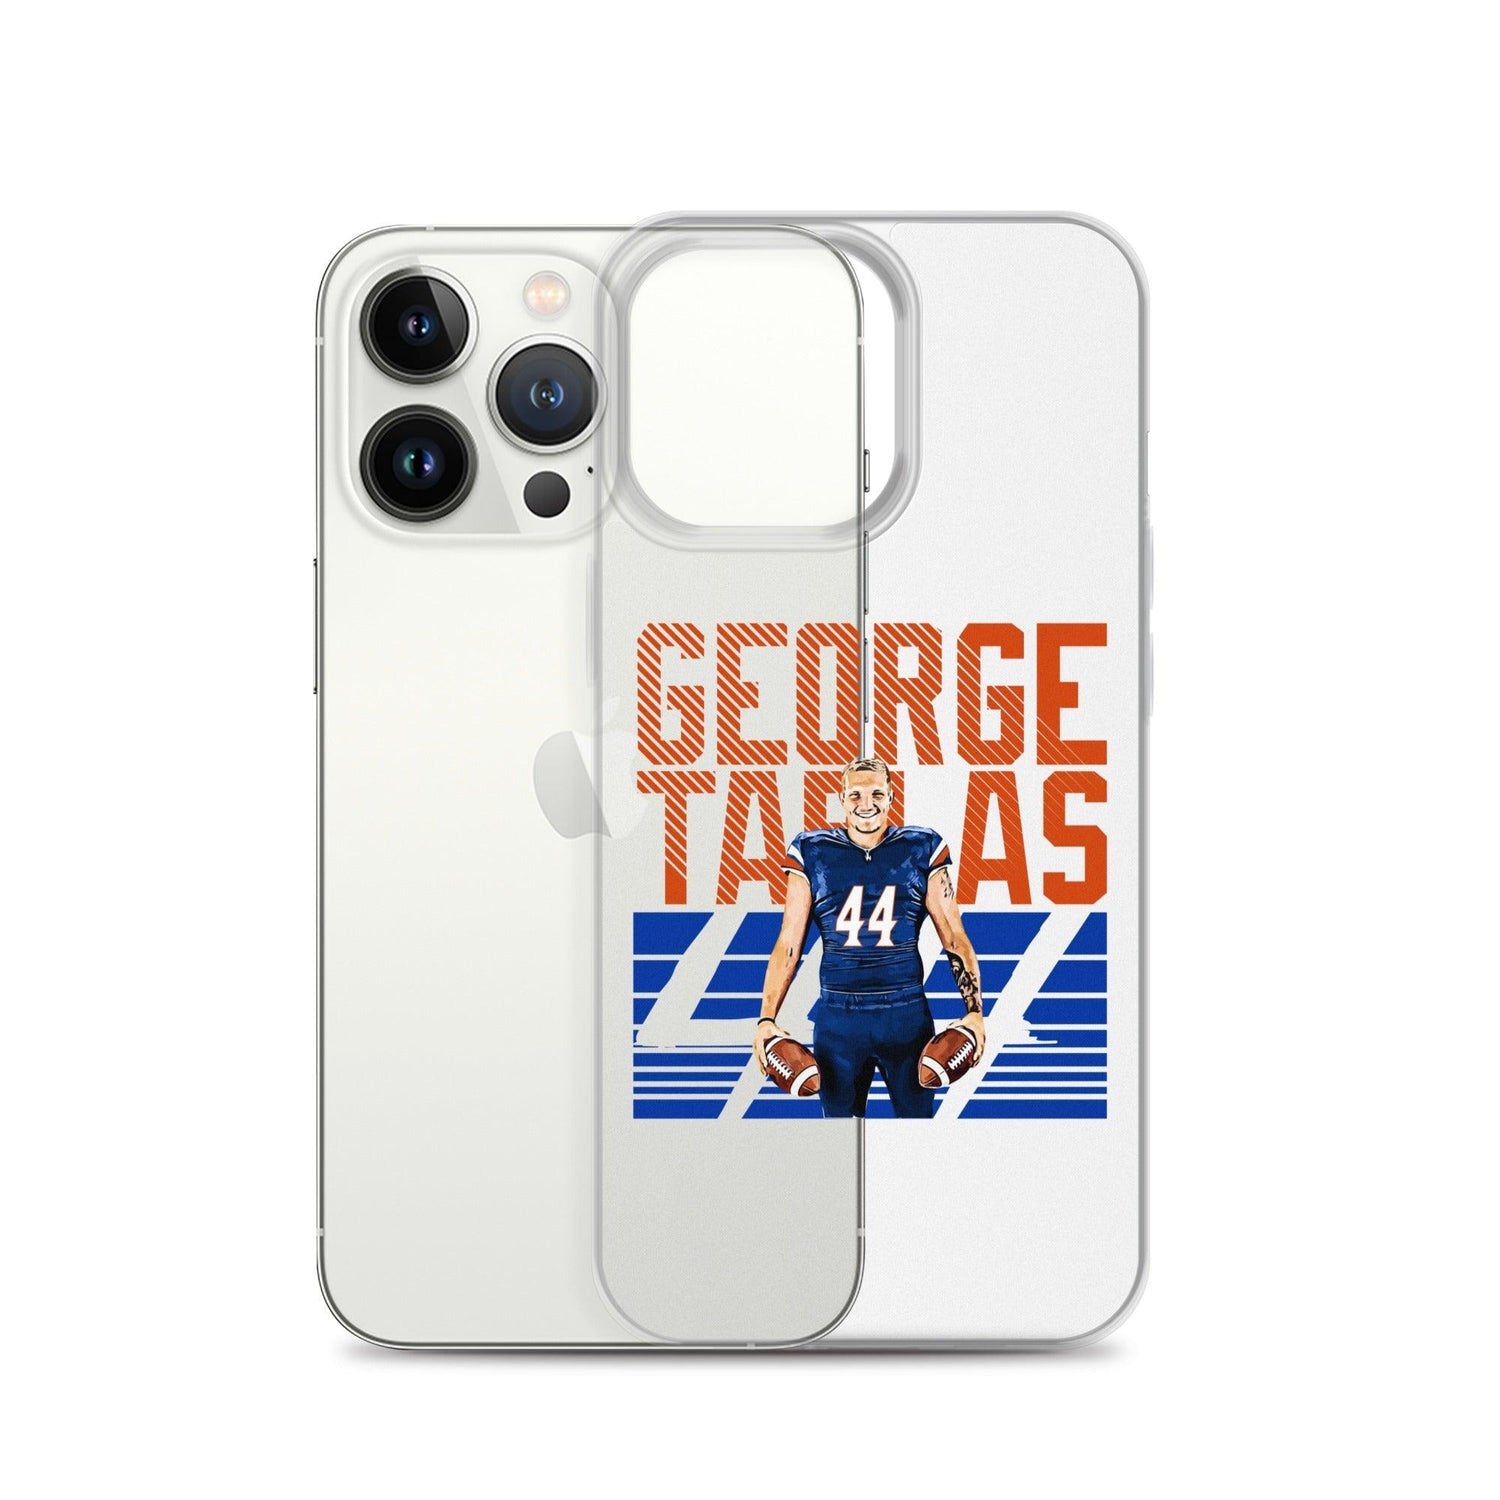 George Tarlas "Gameday" iPhone Case - Fan Arch